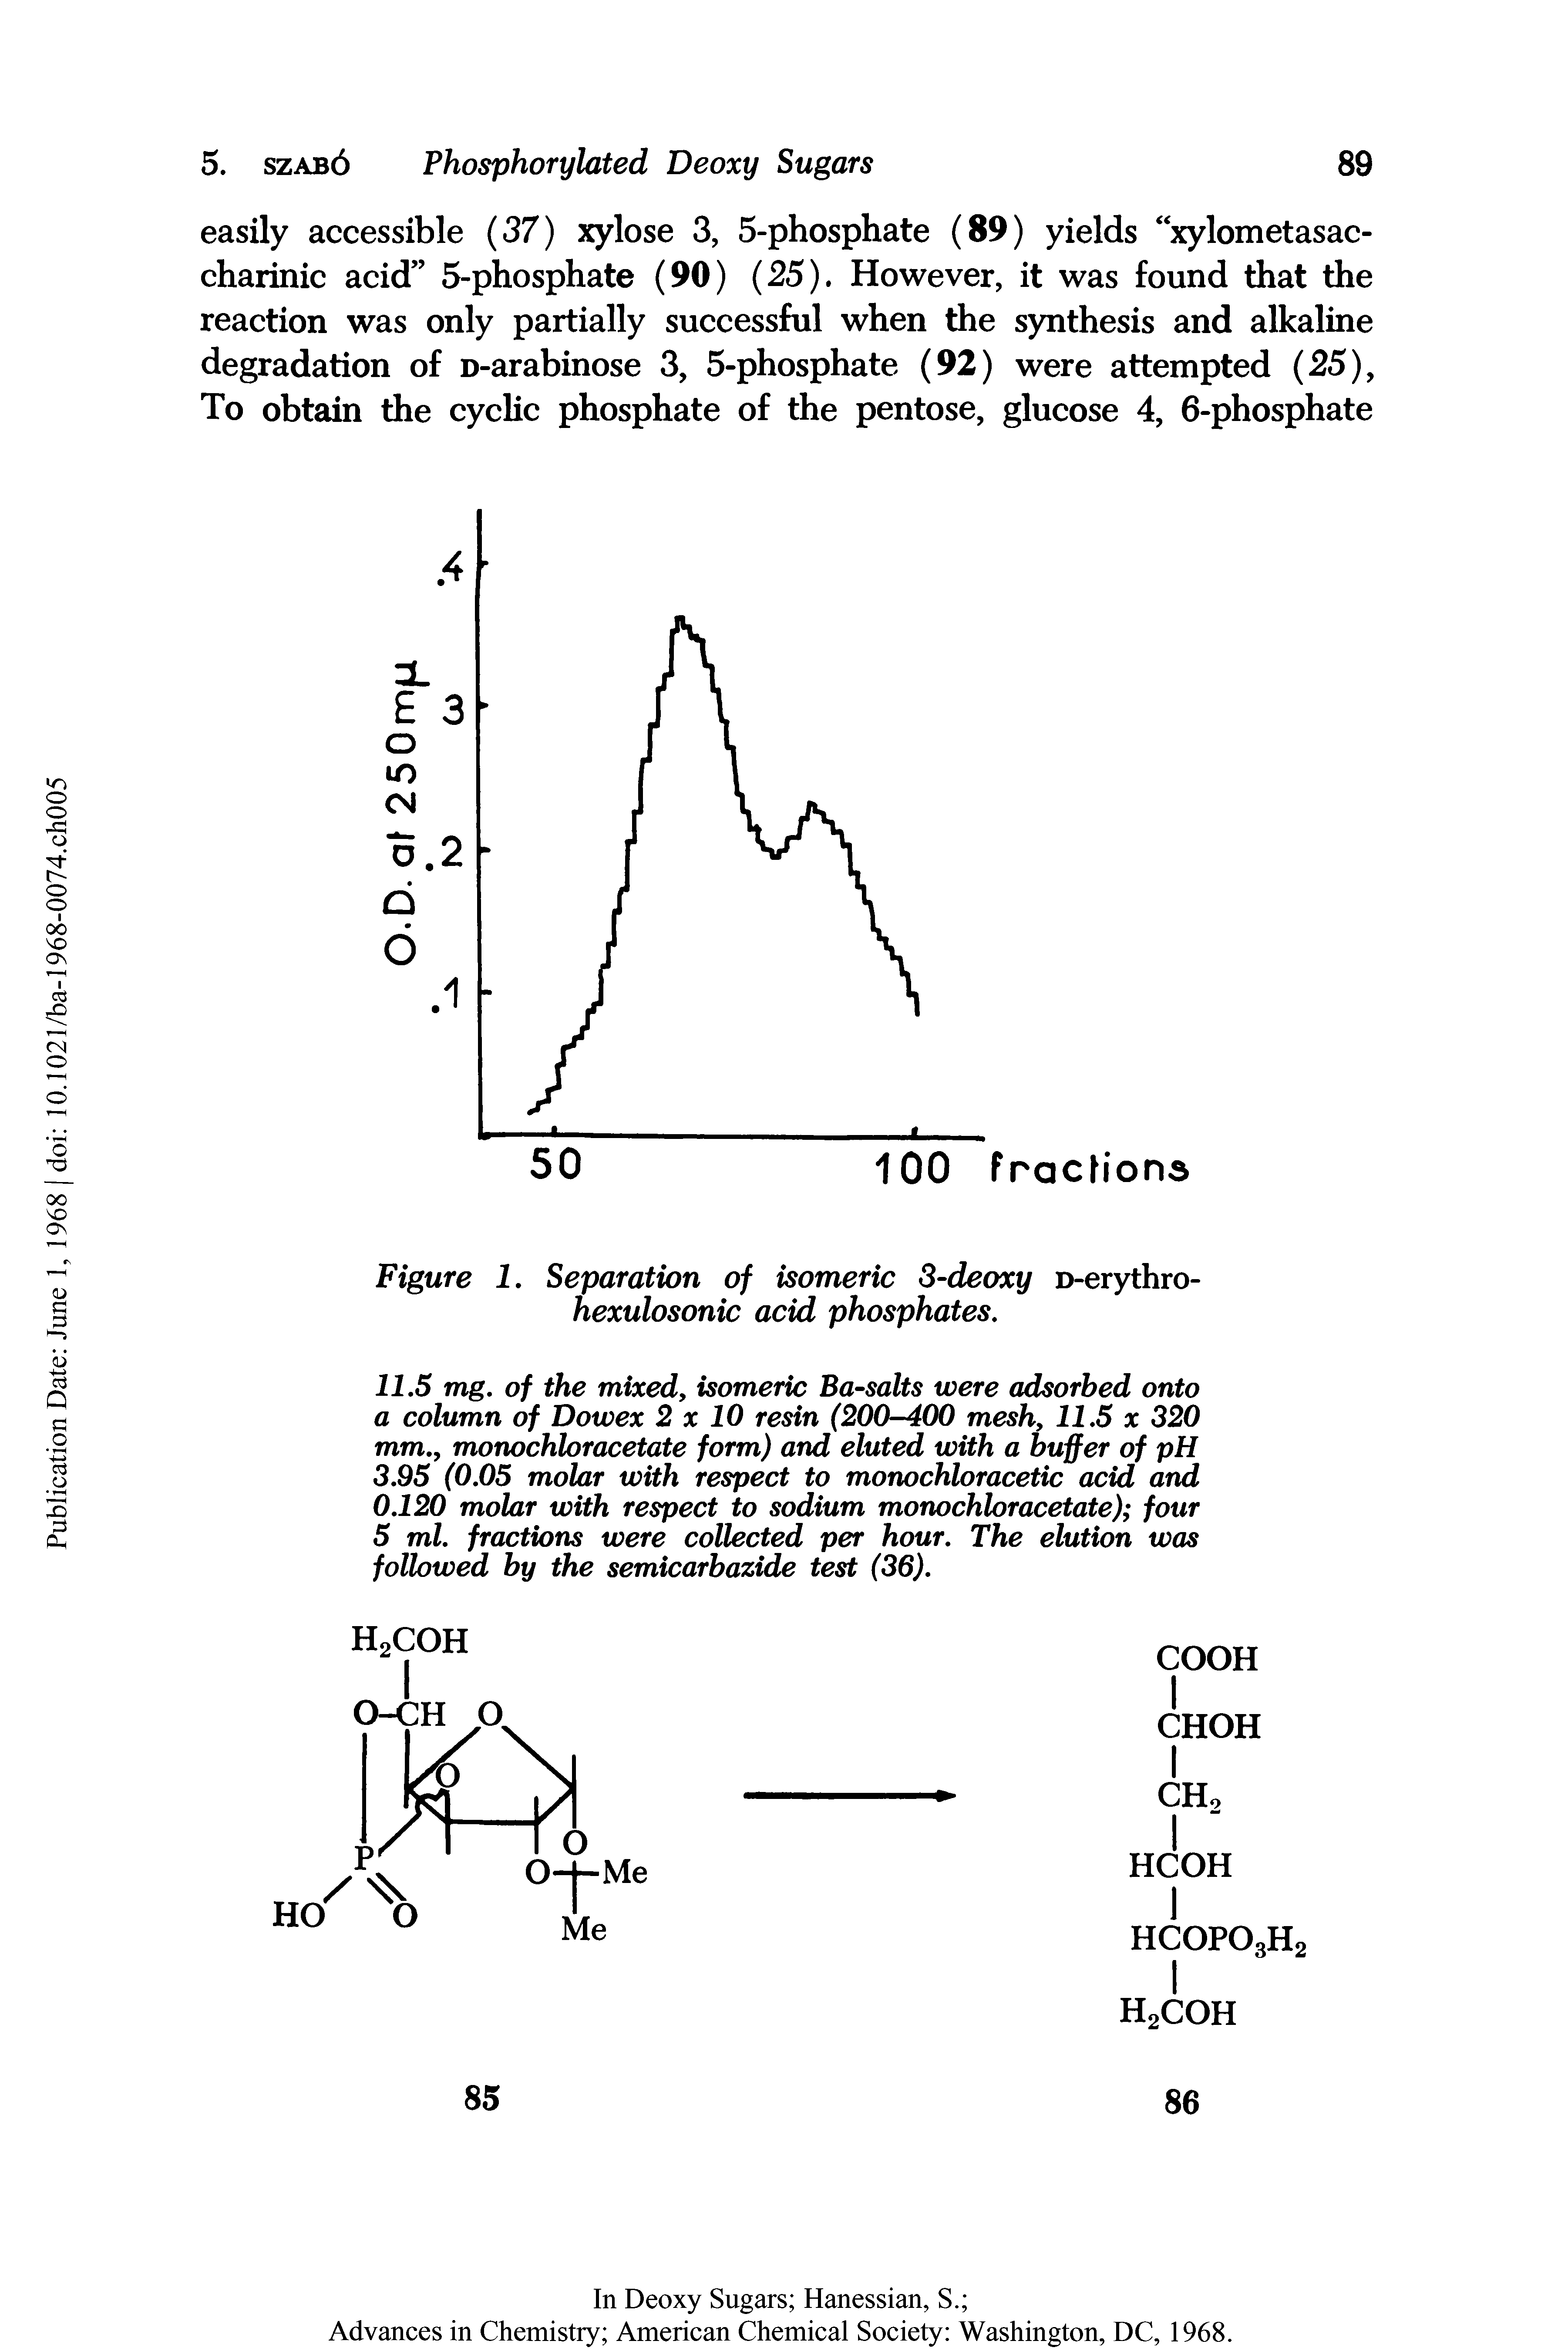 Figure 1. Separation of isomeric S-deoxy D-erythro-hexulosonic acid phosphates.